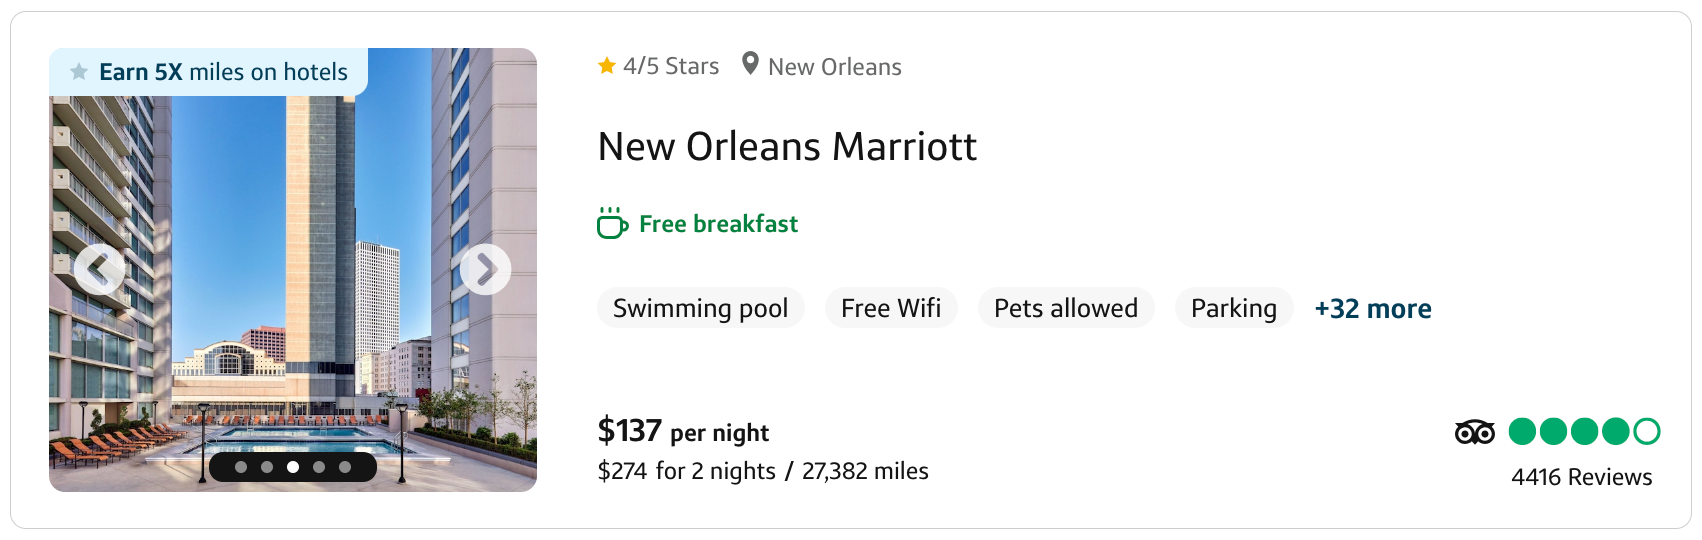 screenshot: New Orleans Marriott listing on Capital One travel portal